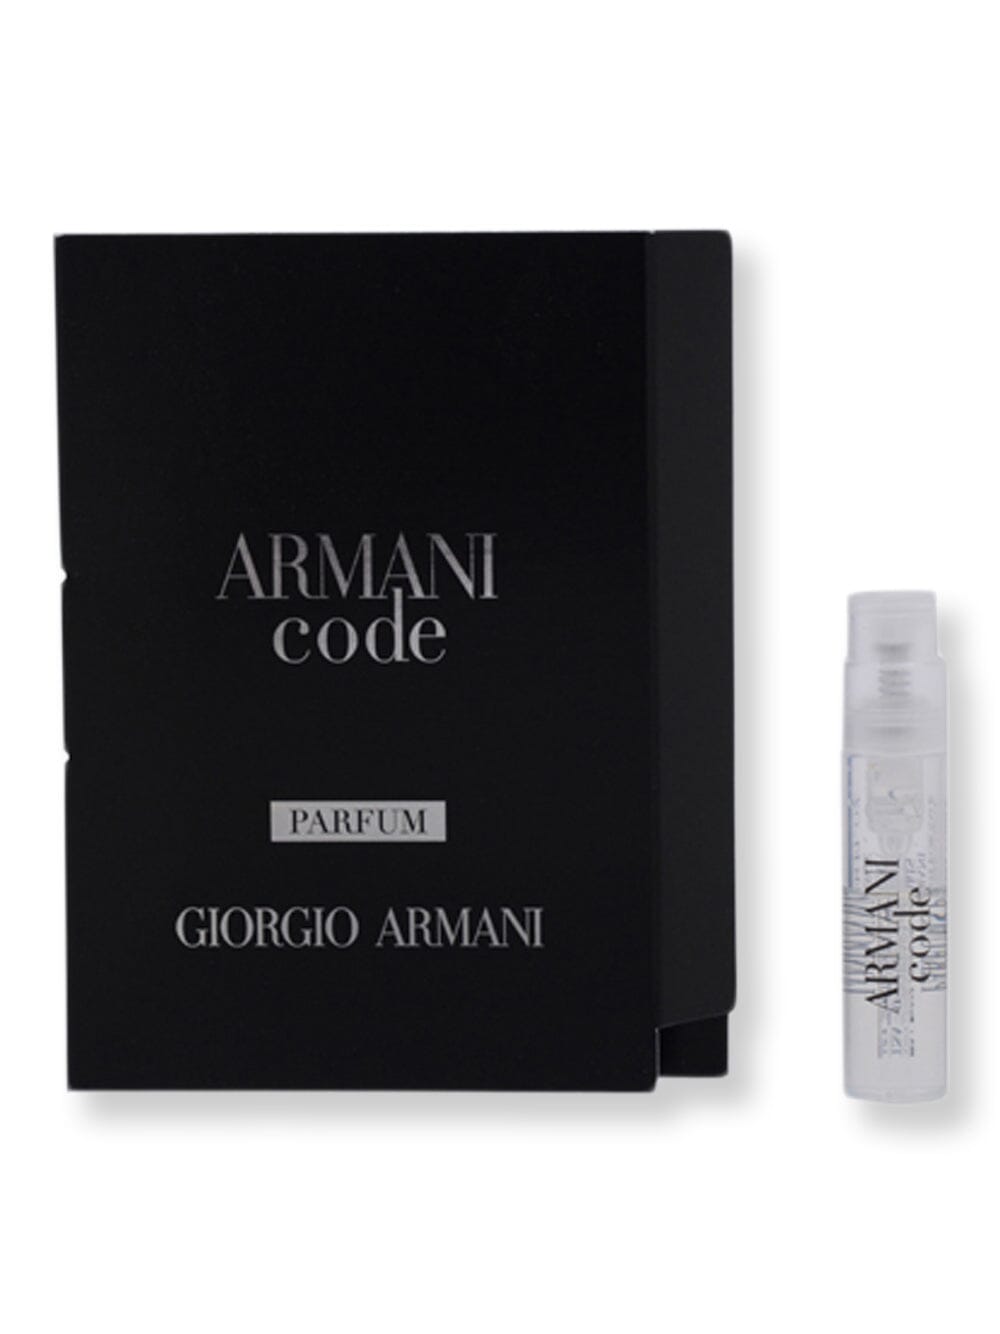 GIORGIO ARMANI GIORGIO ARMANI Armani Code For Men Parfum Spray 0.04 oz1.2 ml Perfume 